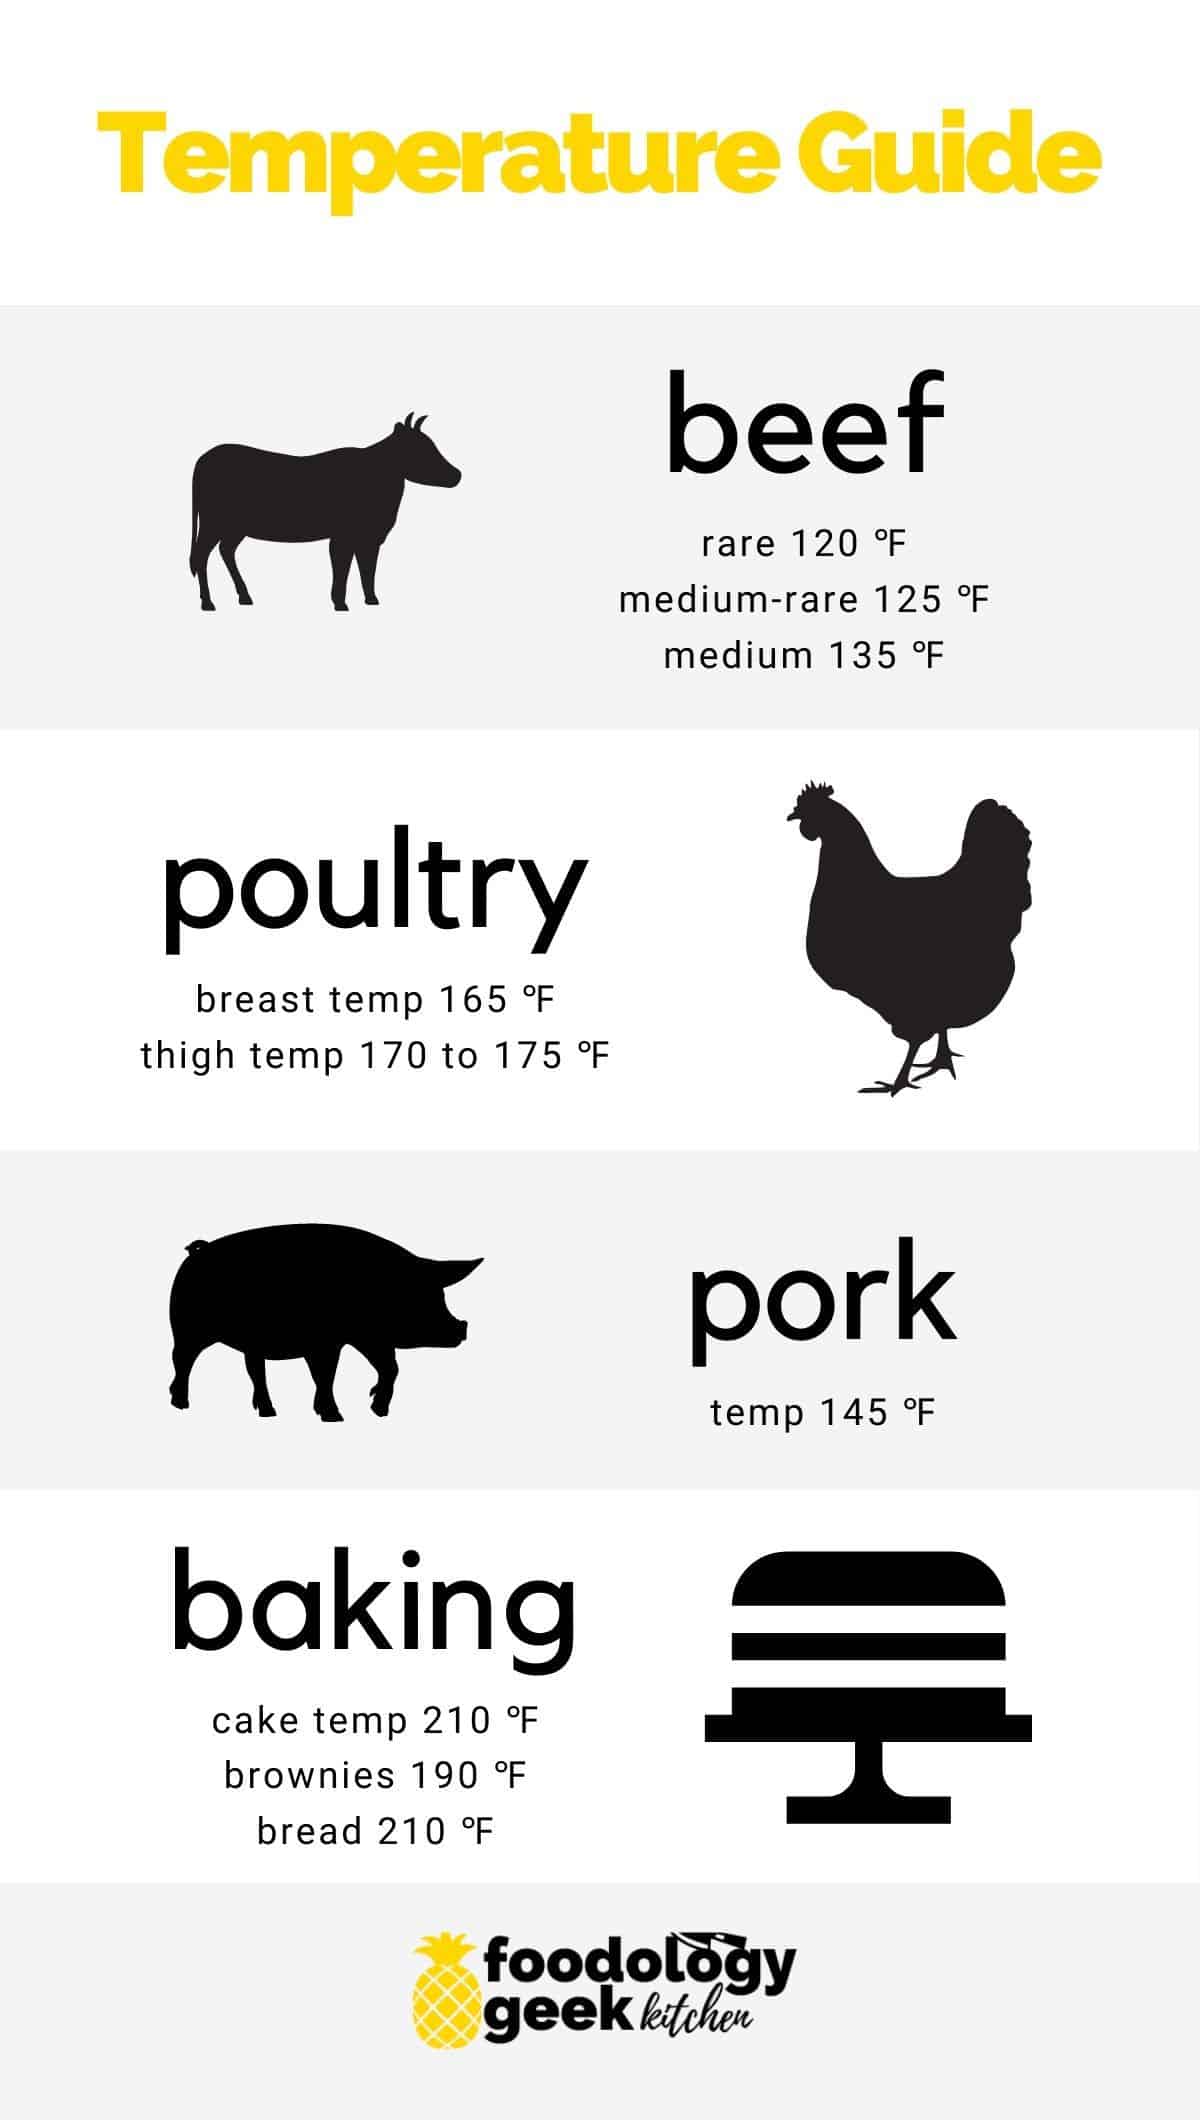 https://www.foodologygeek.com/wp-content/uploads/2021/06/Temperature-Guide-4.jpg